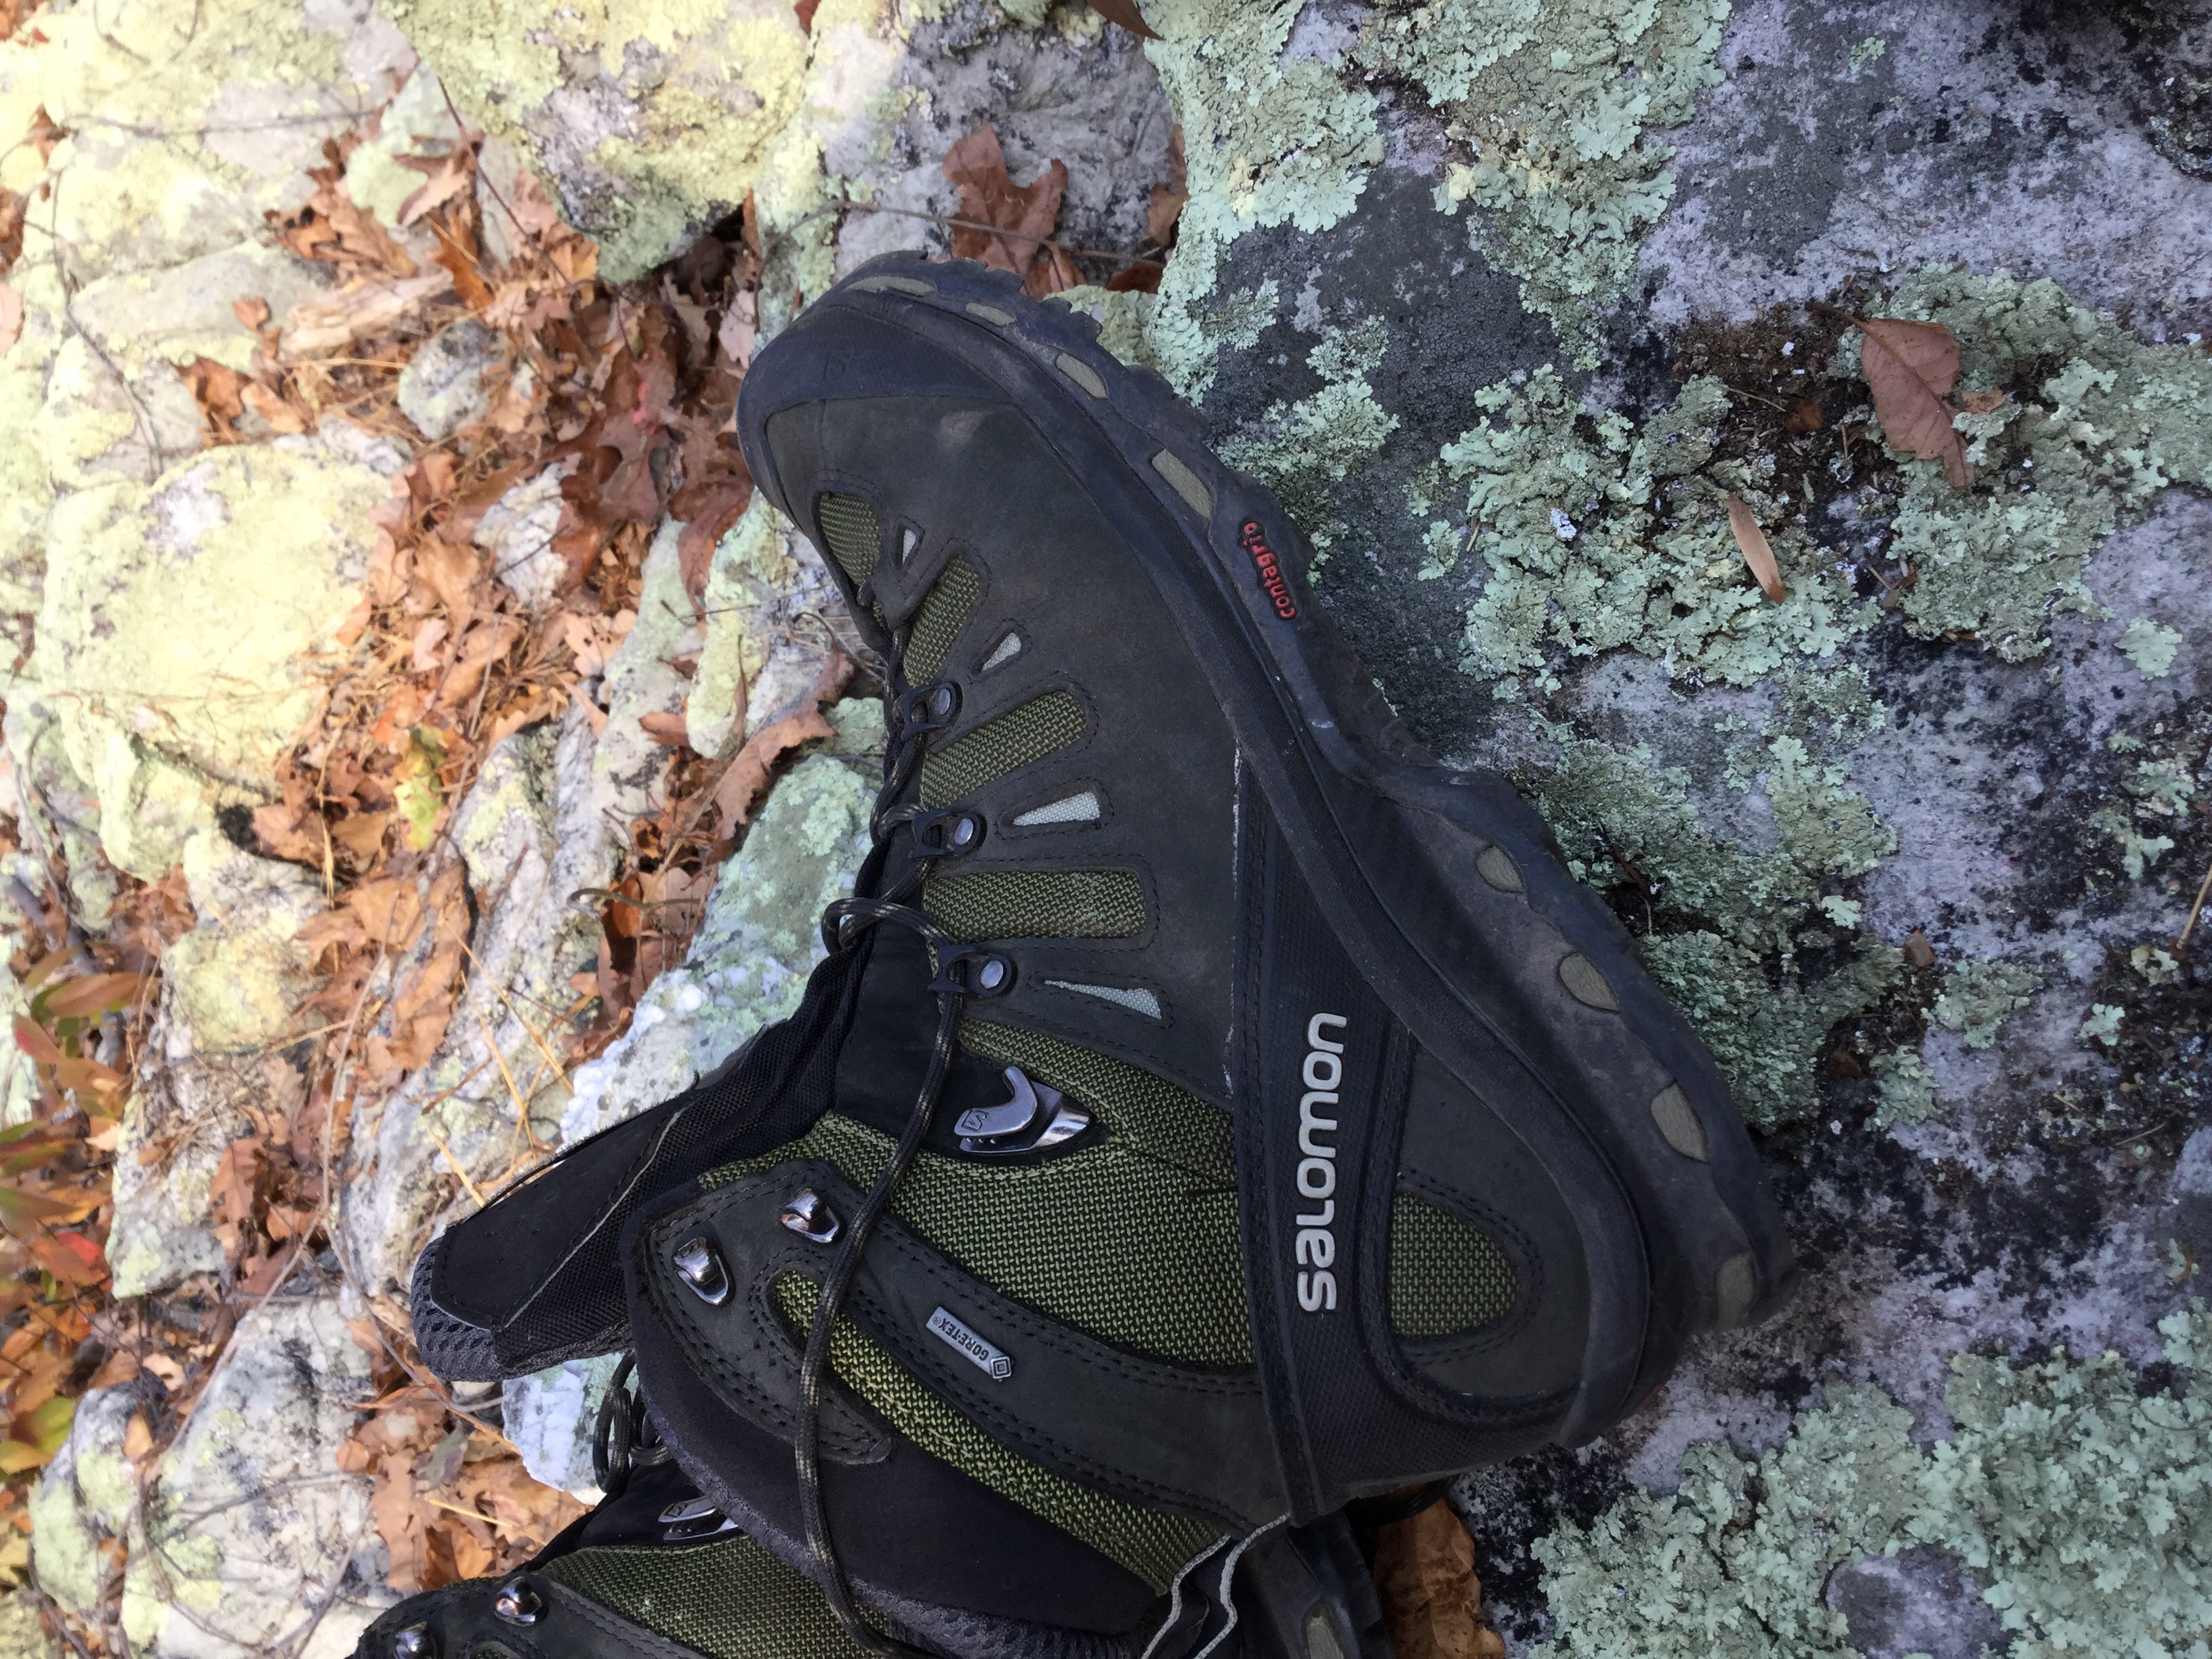 Hiking boot